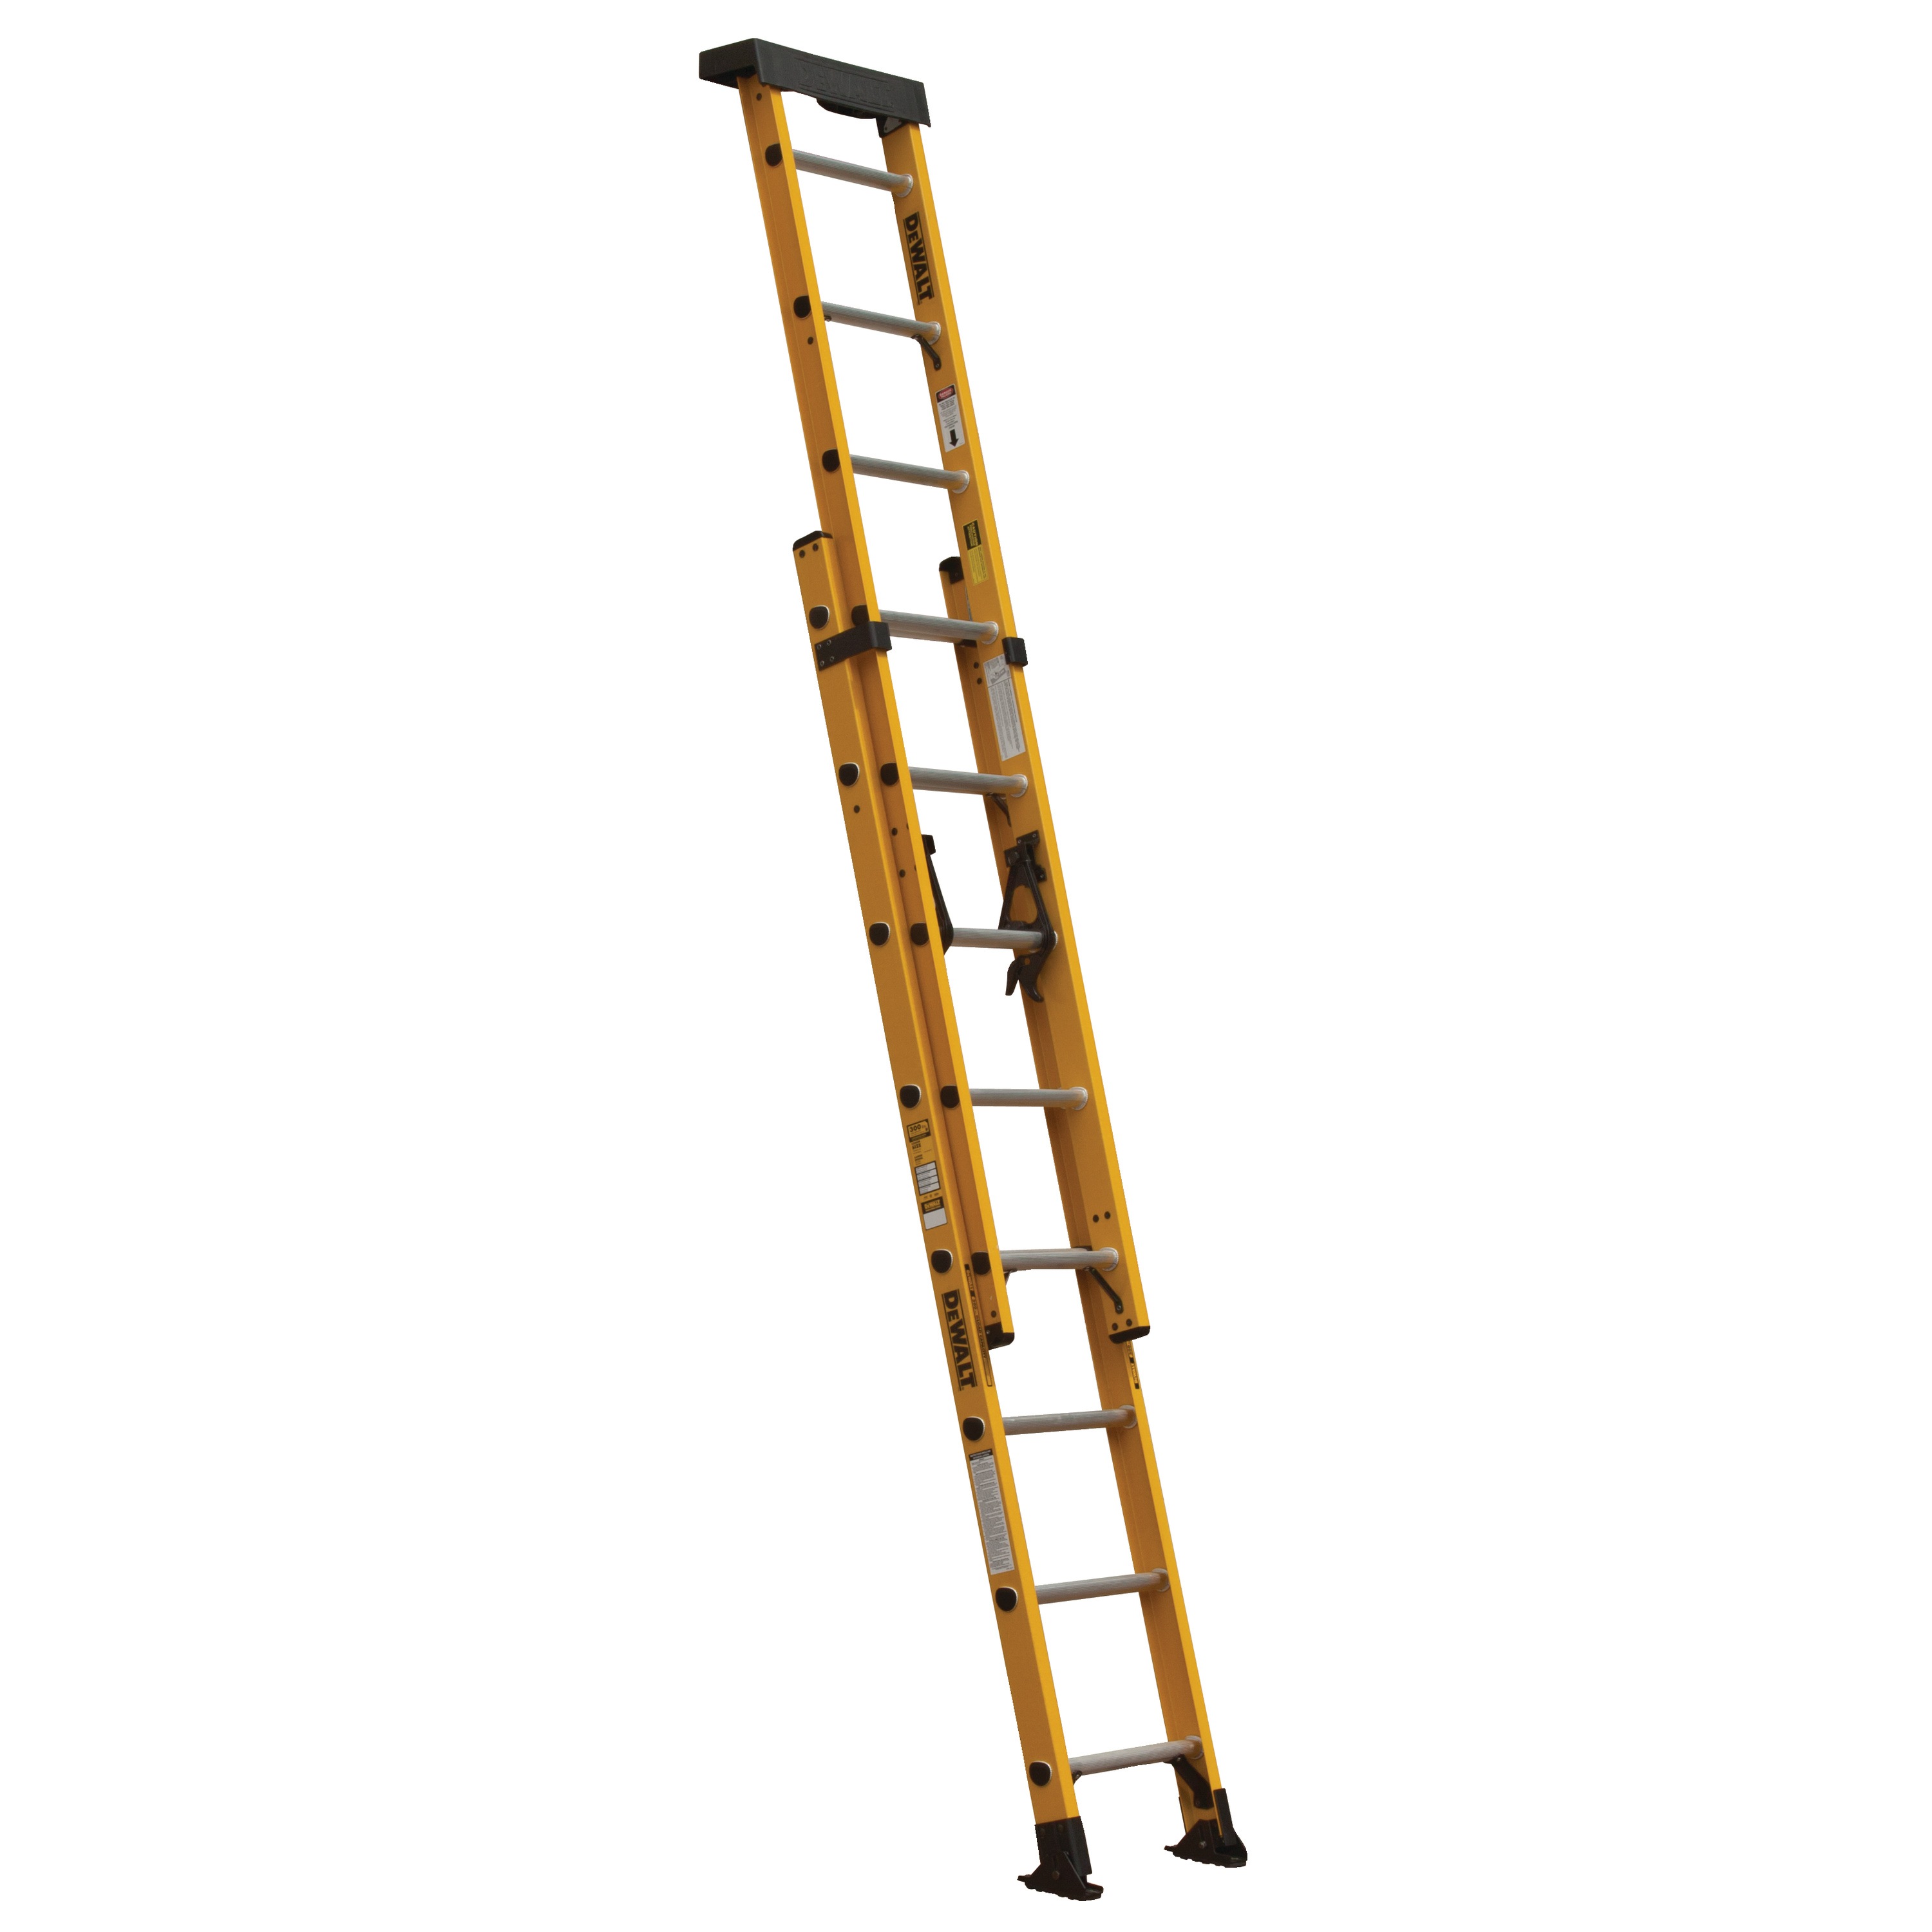 16' Fiberglass Extension Ladder 300 lbs. Load Capacity DXL302016PT DEWALT